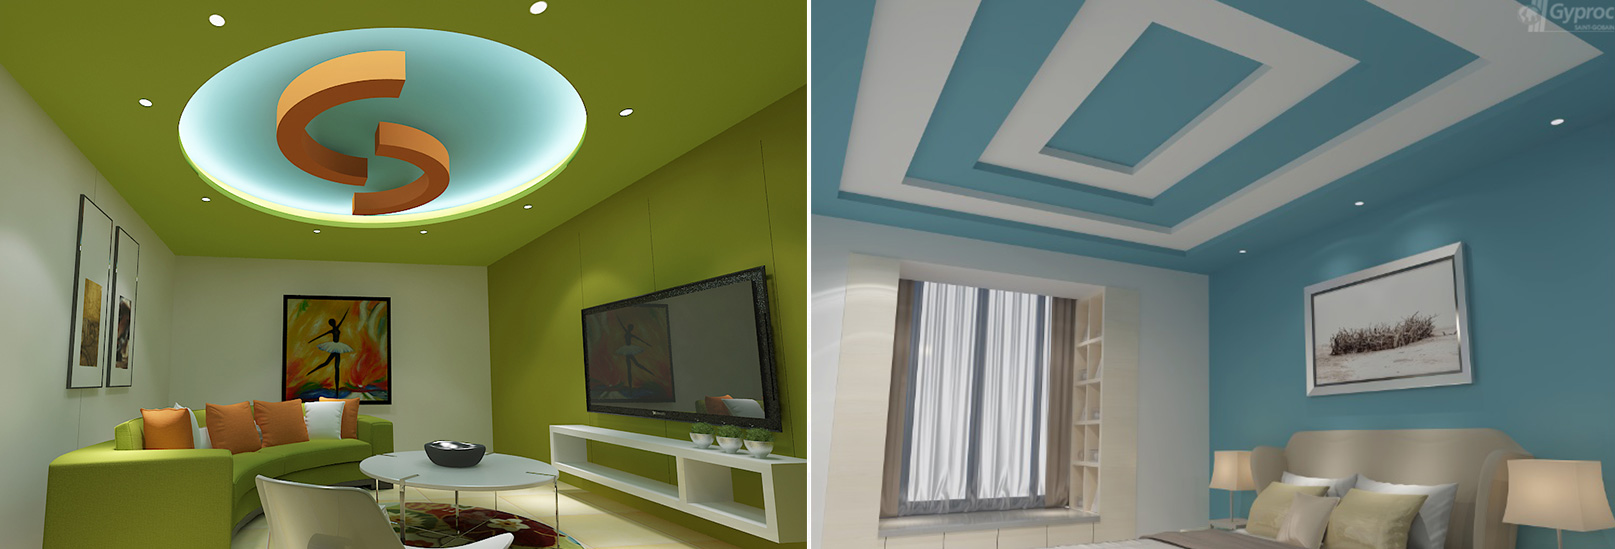 Simple False Ceiling Design For Living Room India | Bryont Blog